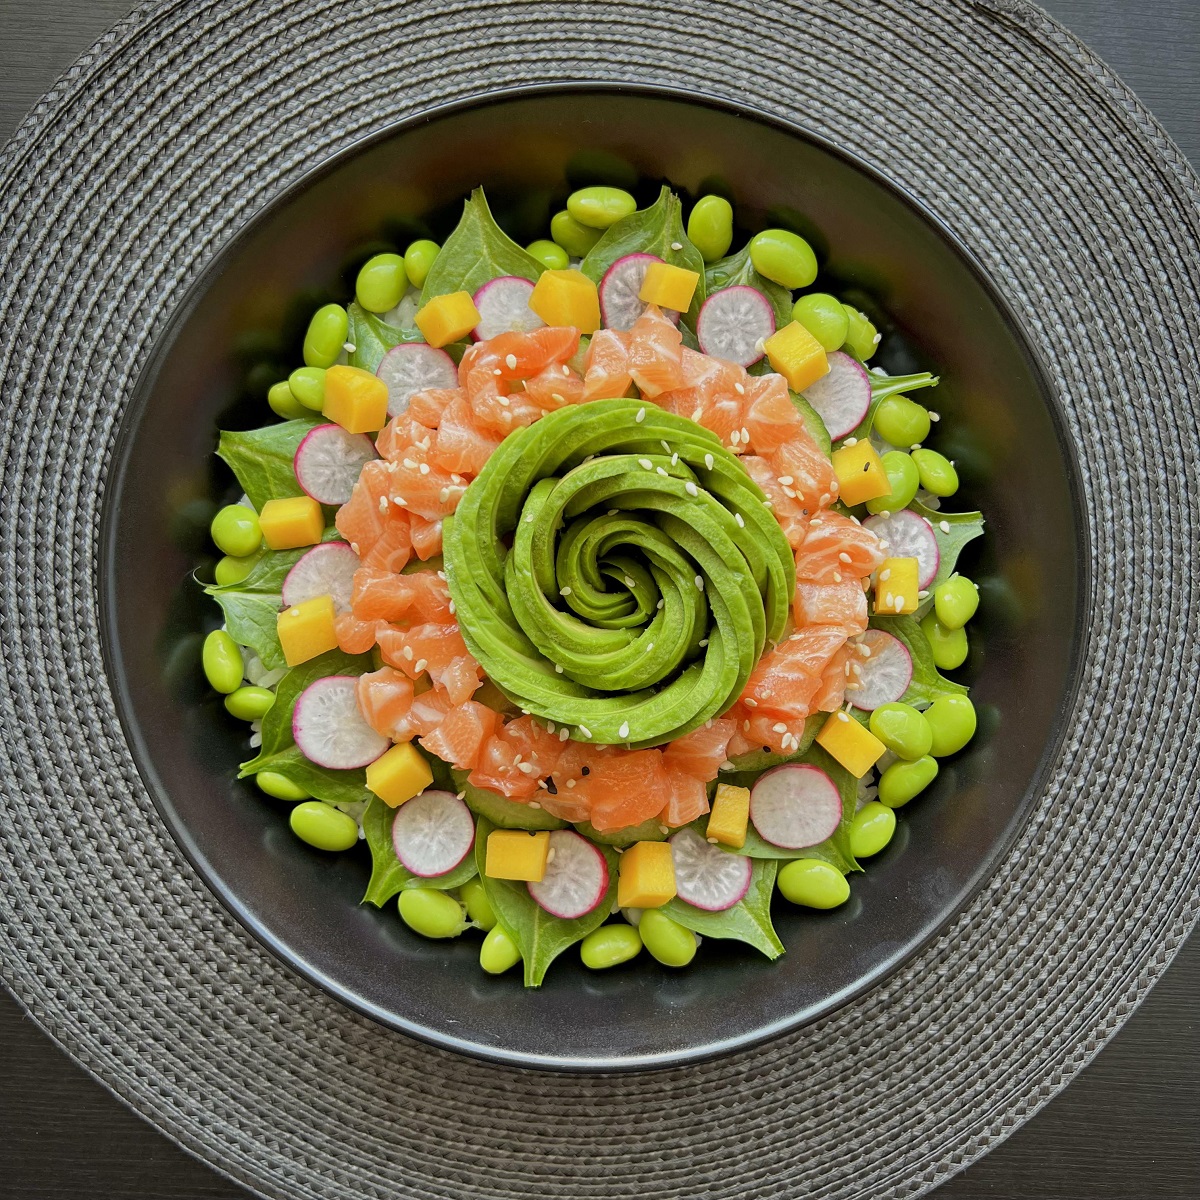 I Made A Poke Bowl At Home - Food Photos